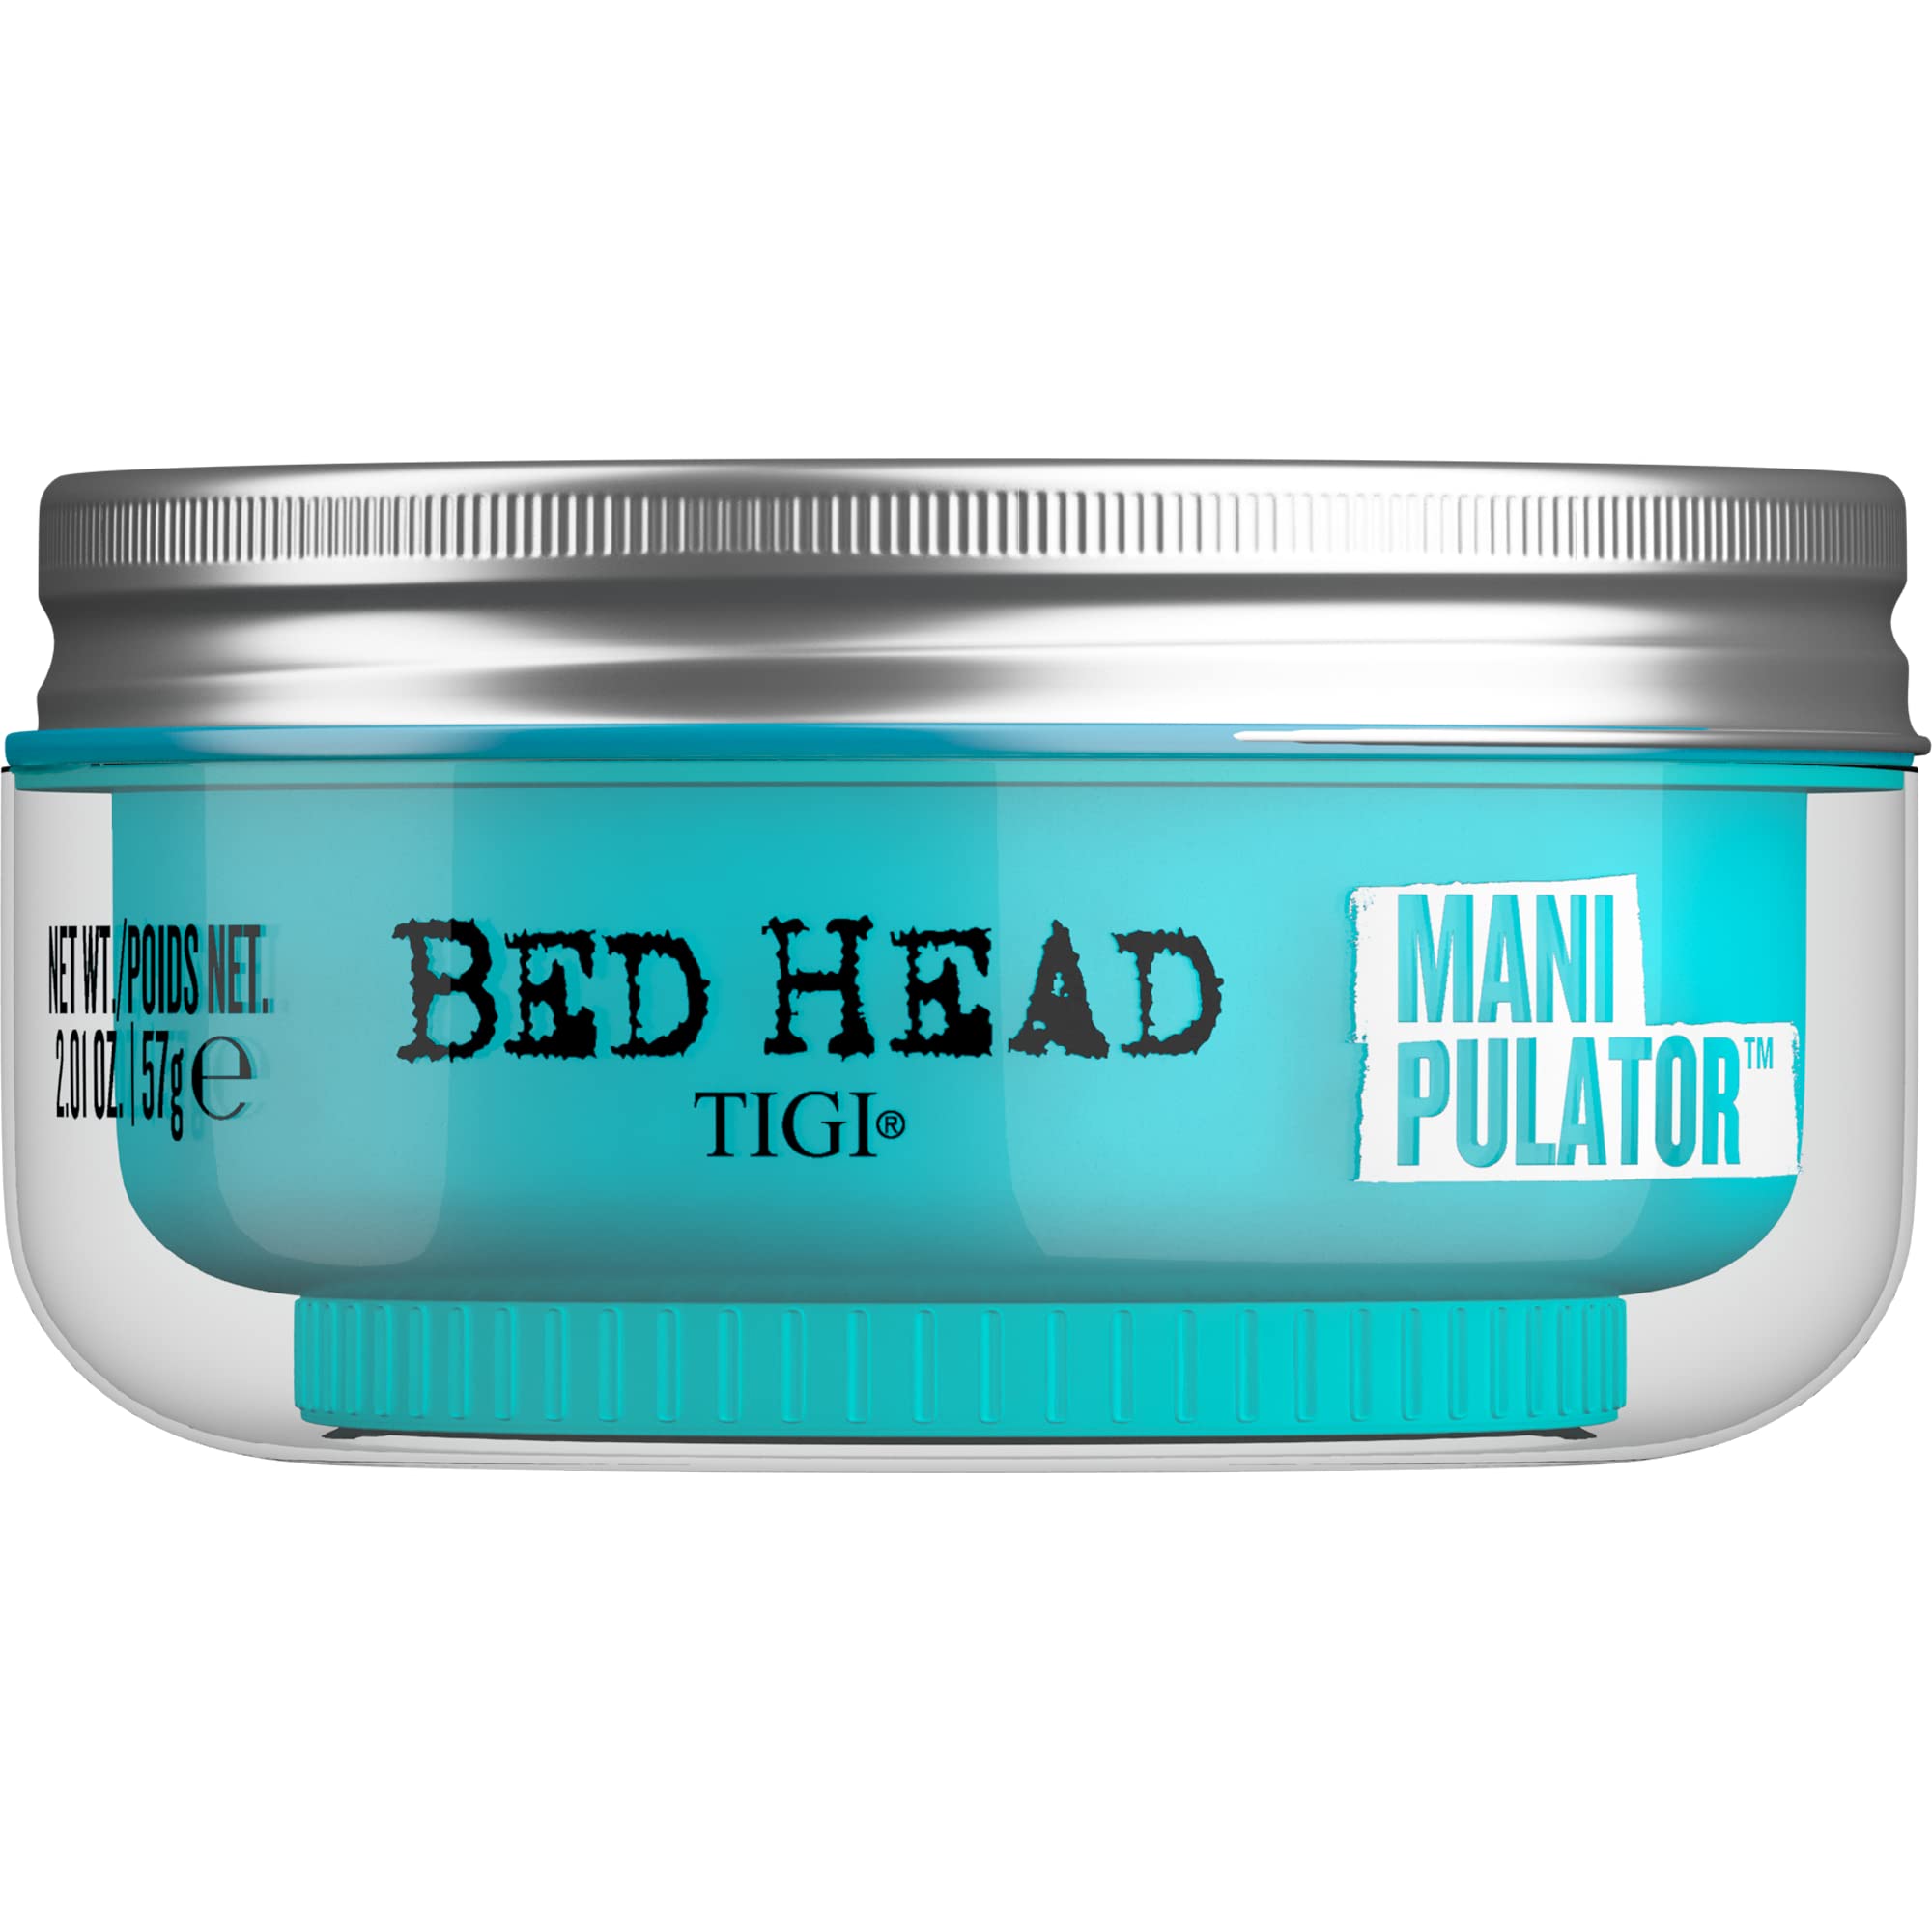 2.01-Oz TIGI Bed Head Hair Manipulator $12.20 + Free Shipping w/ Prime or on $35+